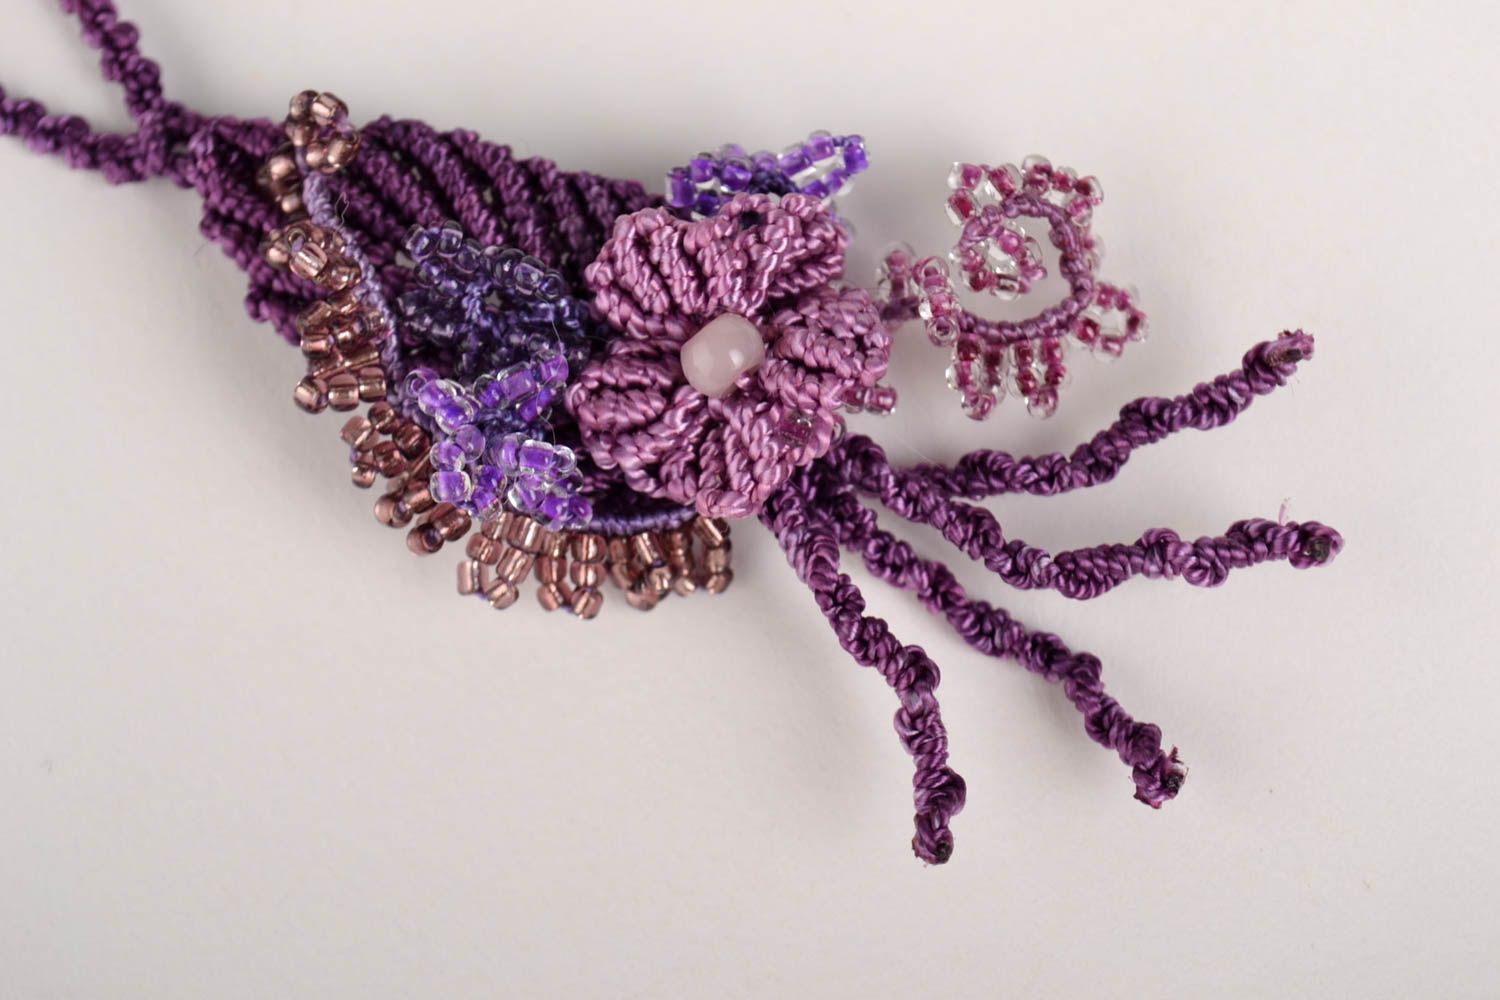 Woven pendant handmade thread jewelry macrame bijouterie gift for women photo 2